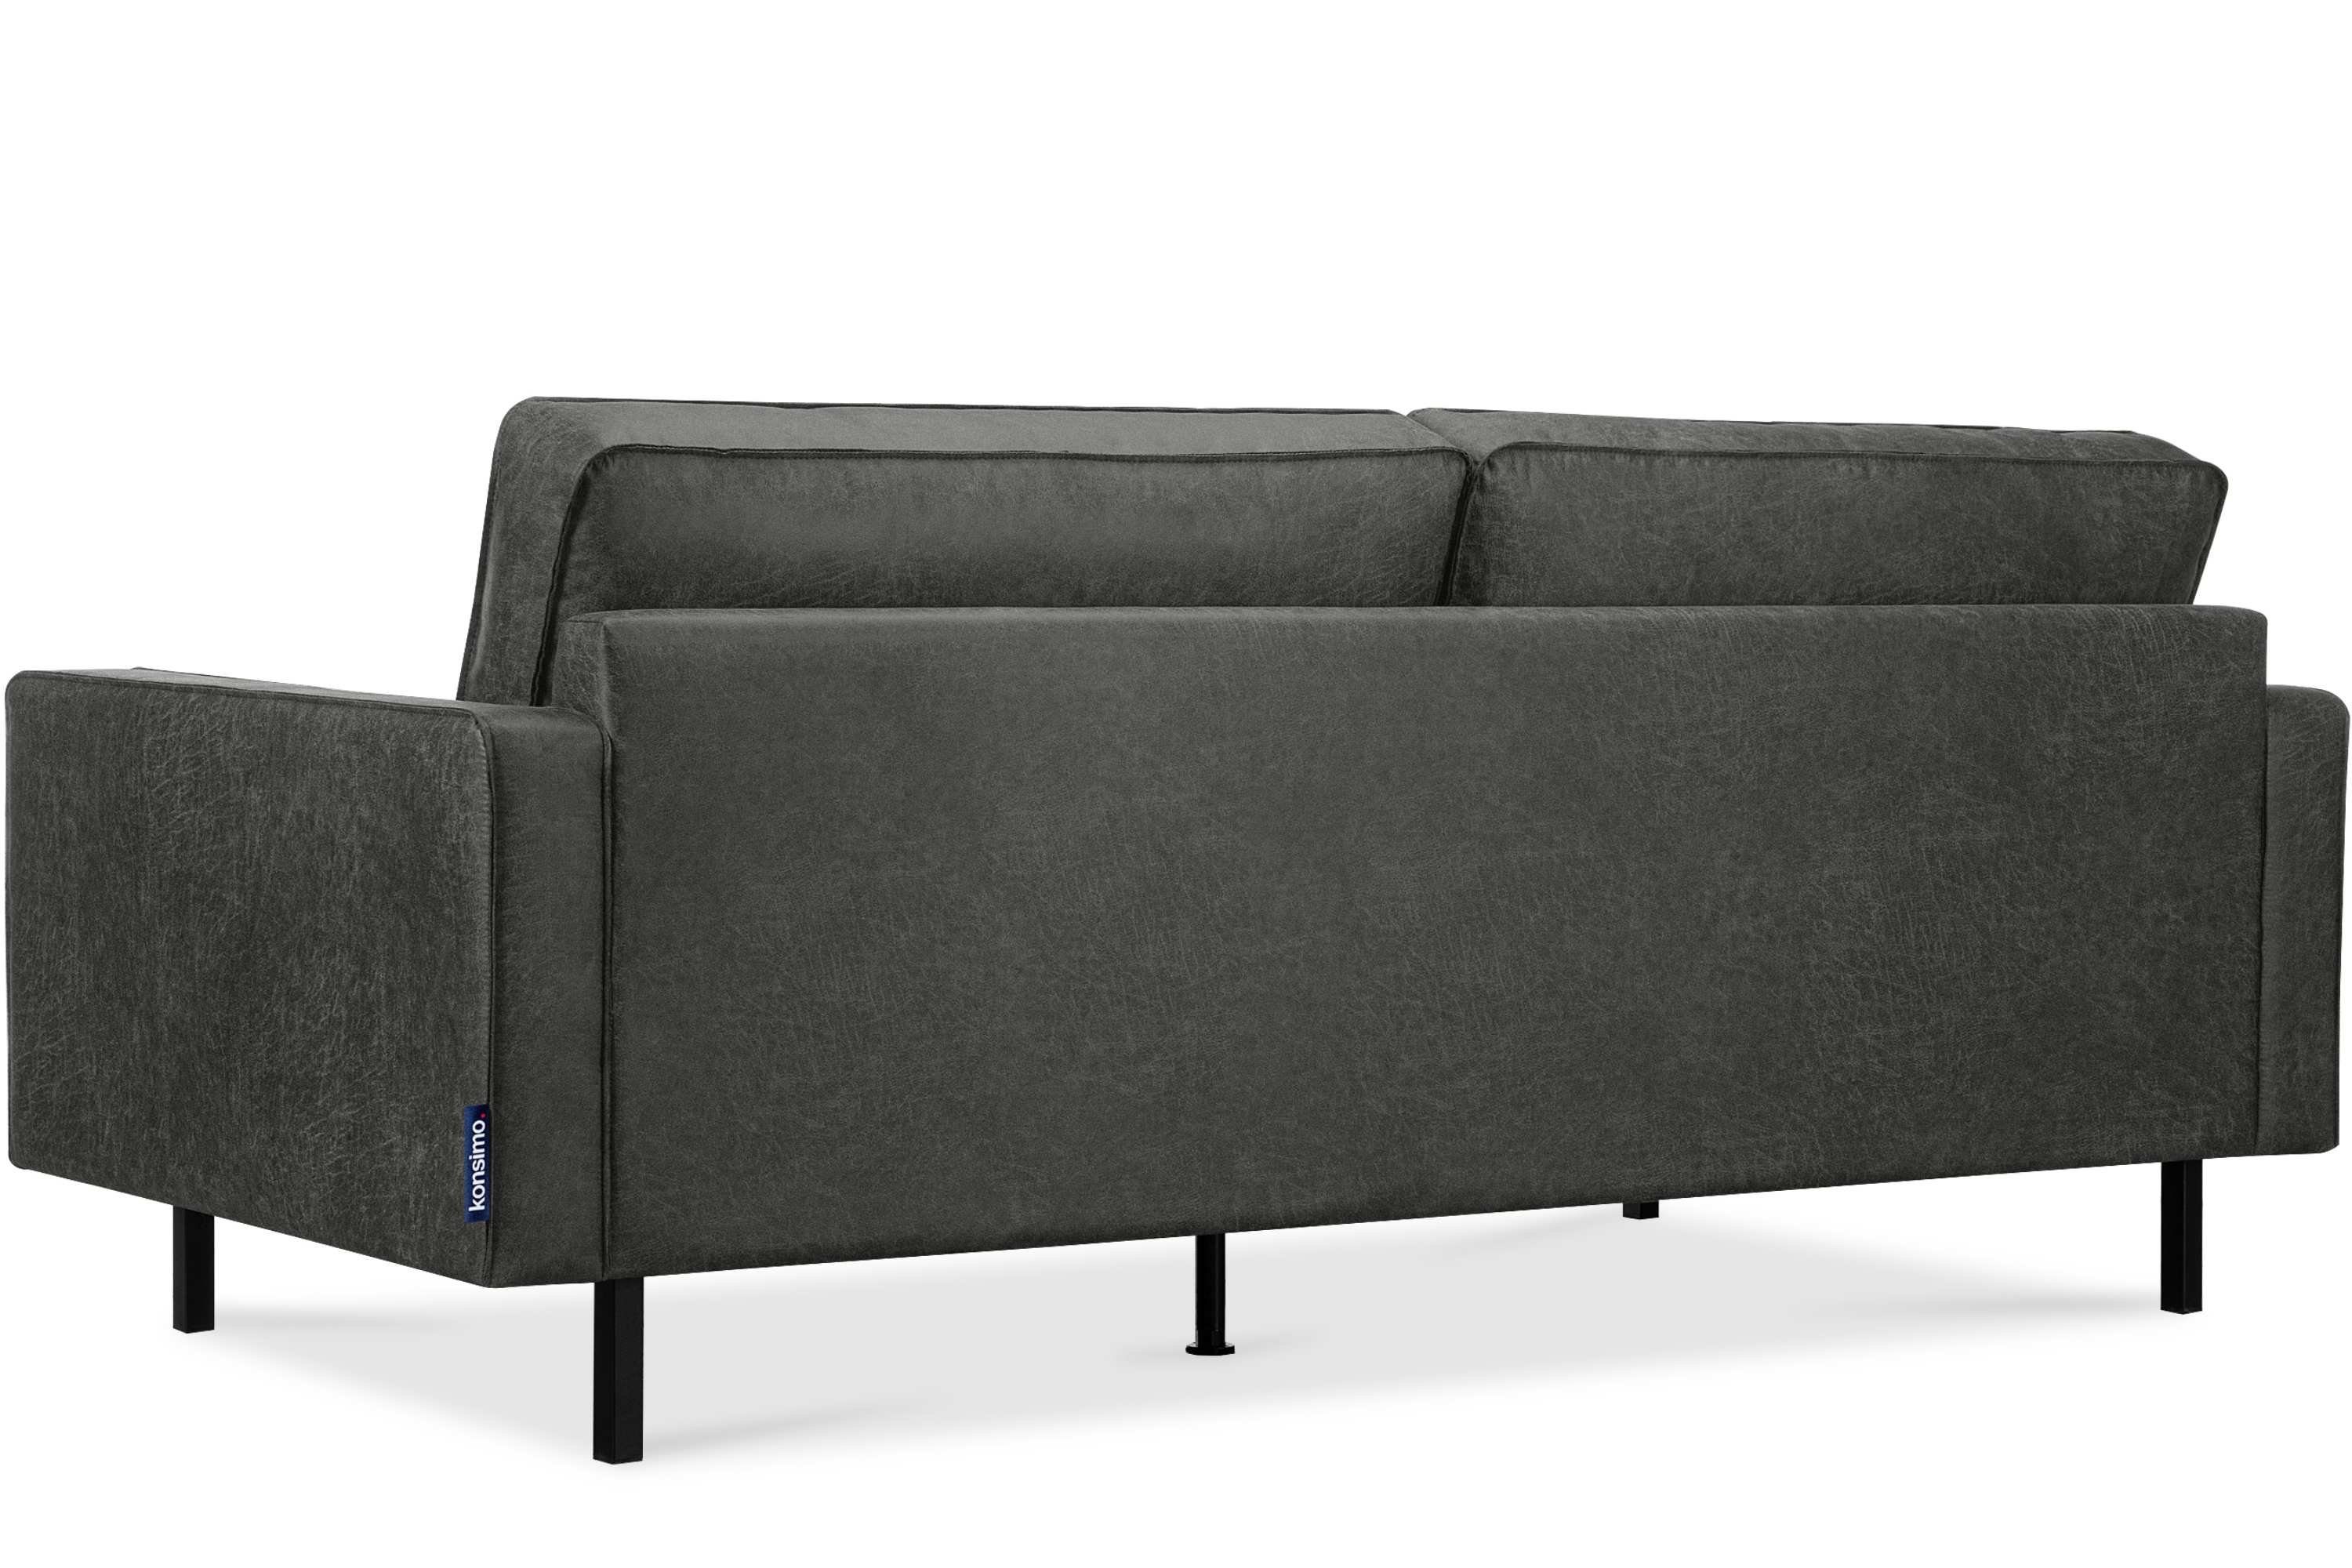 Konsimo 3-Sitzer INVIA Dreisitzer-Sofa, Grundschicht: | dunkelgrau in EU auf dunkelgrau Echtleder, Metallfüßen, hohen Hergestellt dunkelgrau 